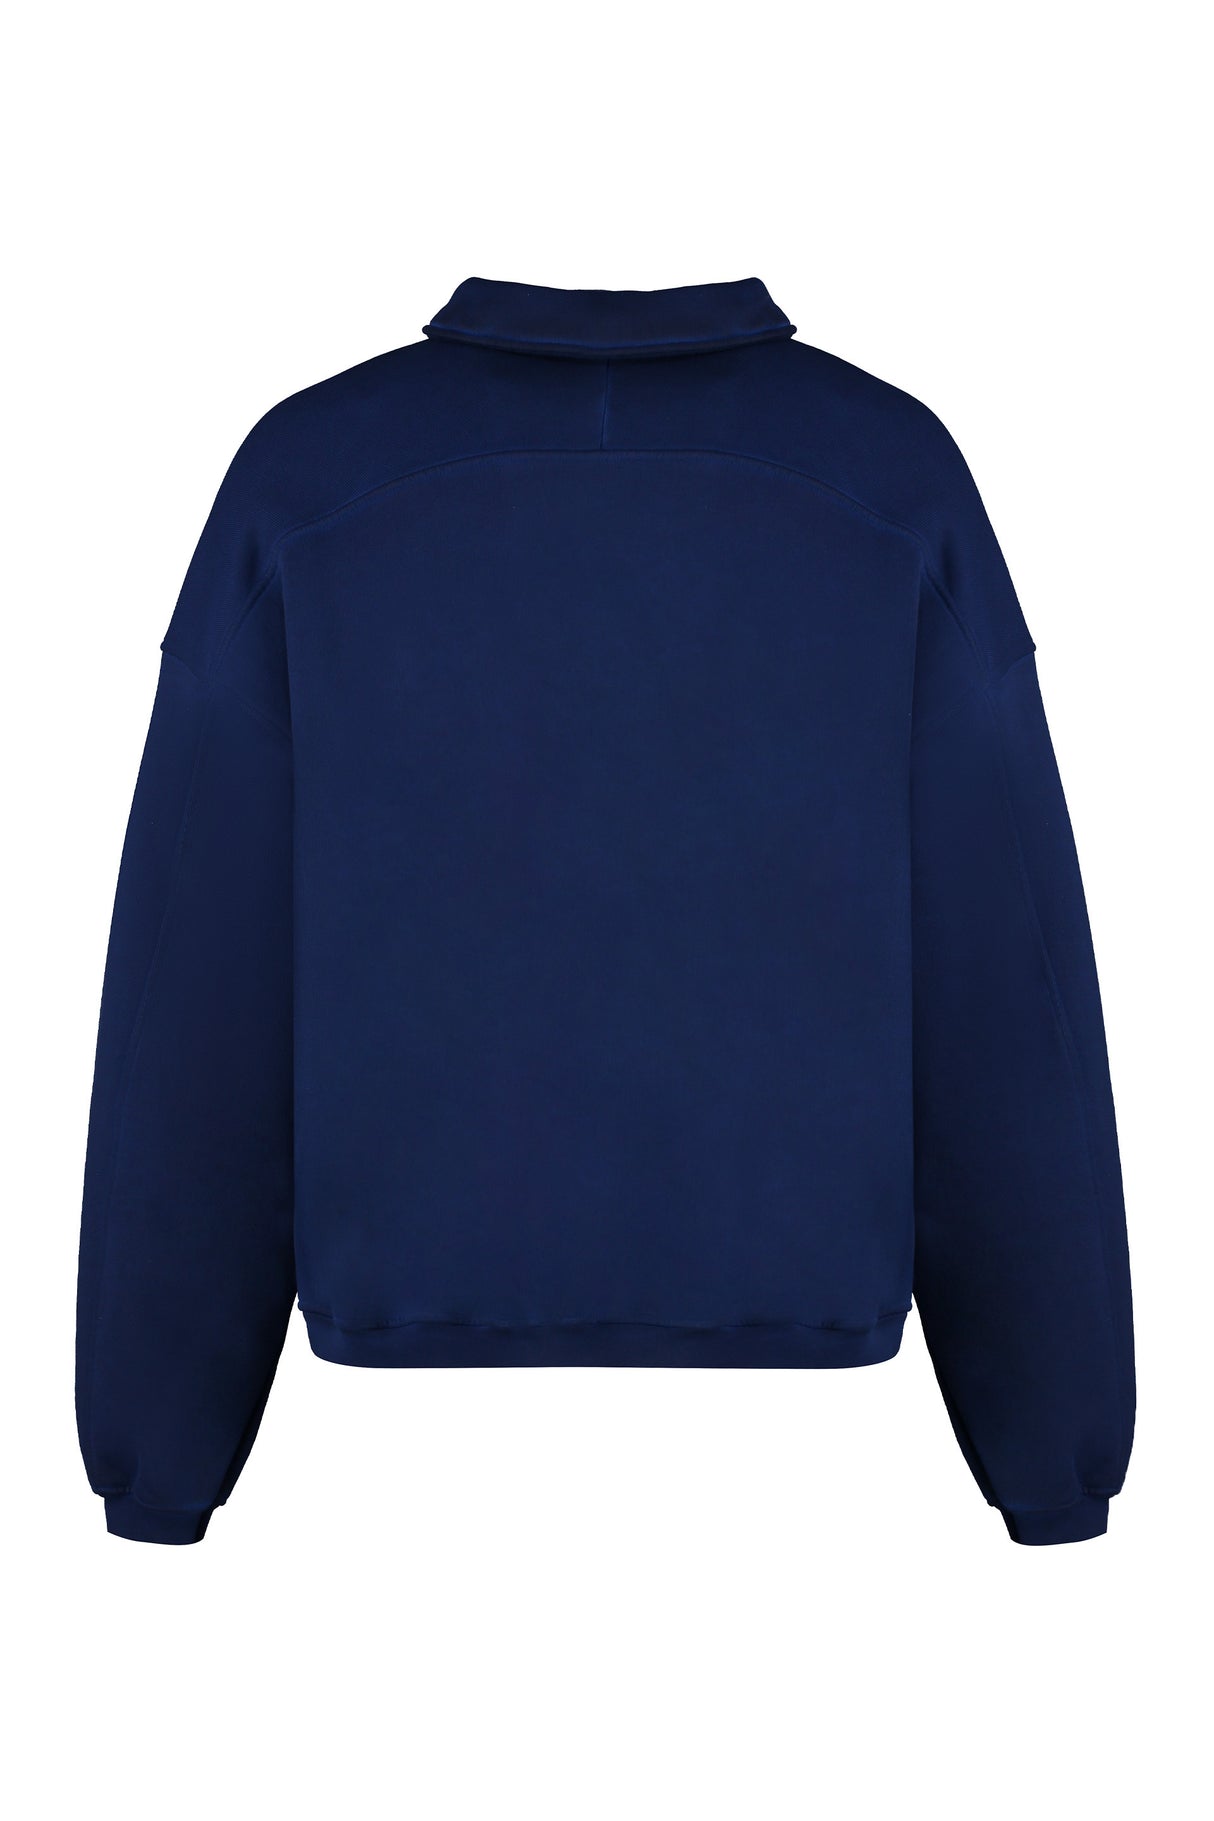 ALEXANDER WANG Blue Cotton Crew-Neck Sweatshirt for Men - FW23 Collection